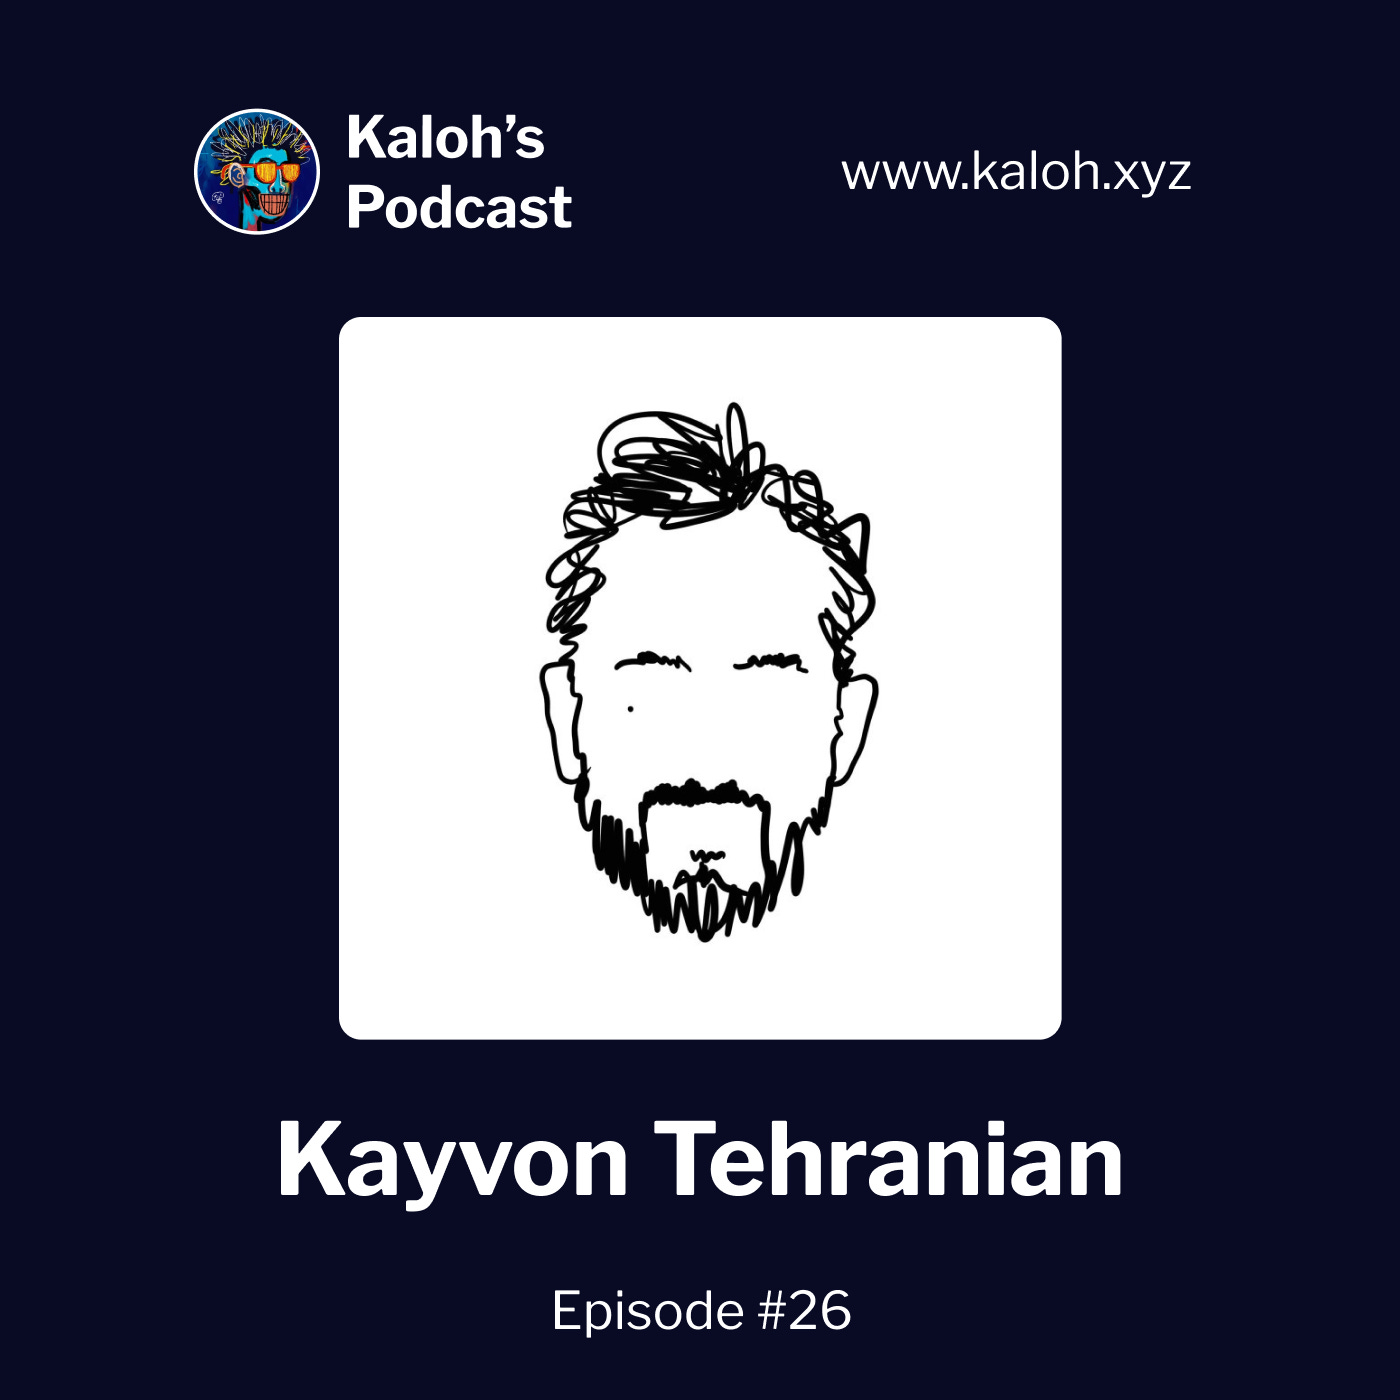 Kayvon Tehranian Foundation, Kaloh's Podcast